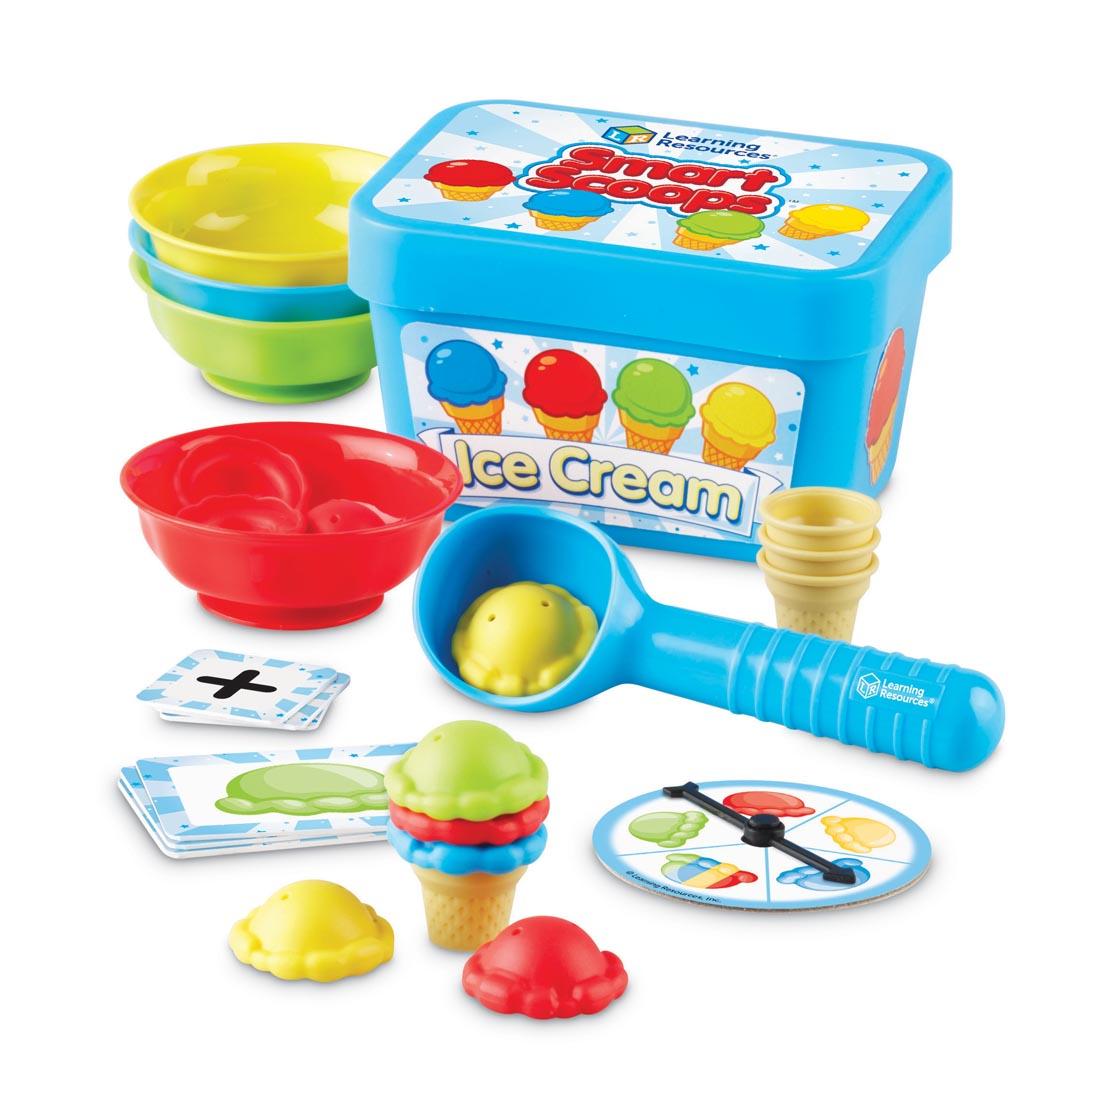 Smart Scoops Math Activity Set has plastic bowls, an ice cream scoop, and pretend ice cream cones